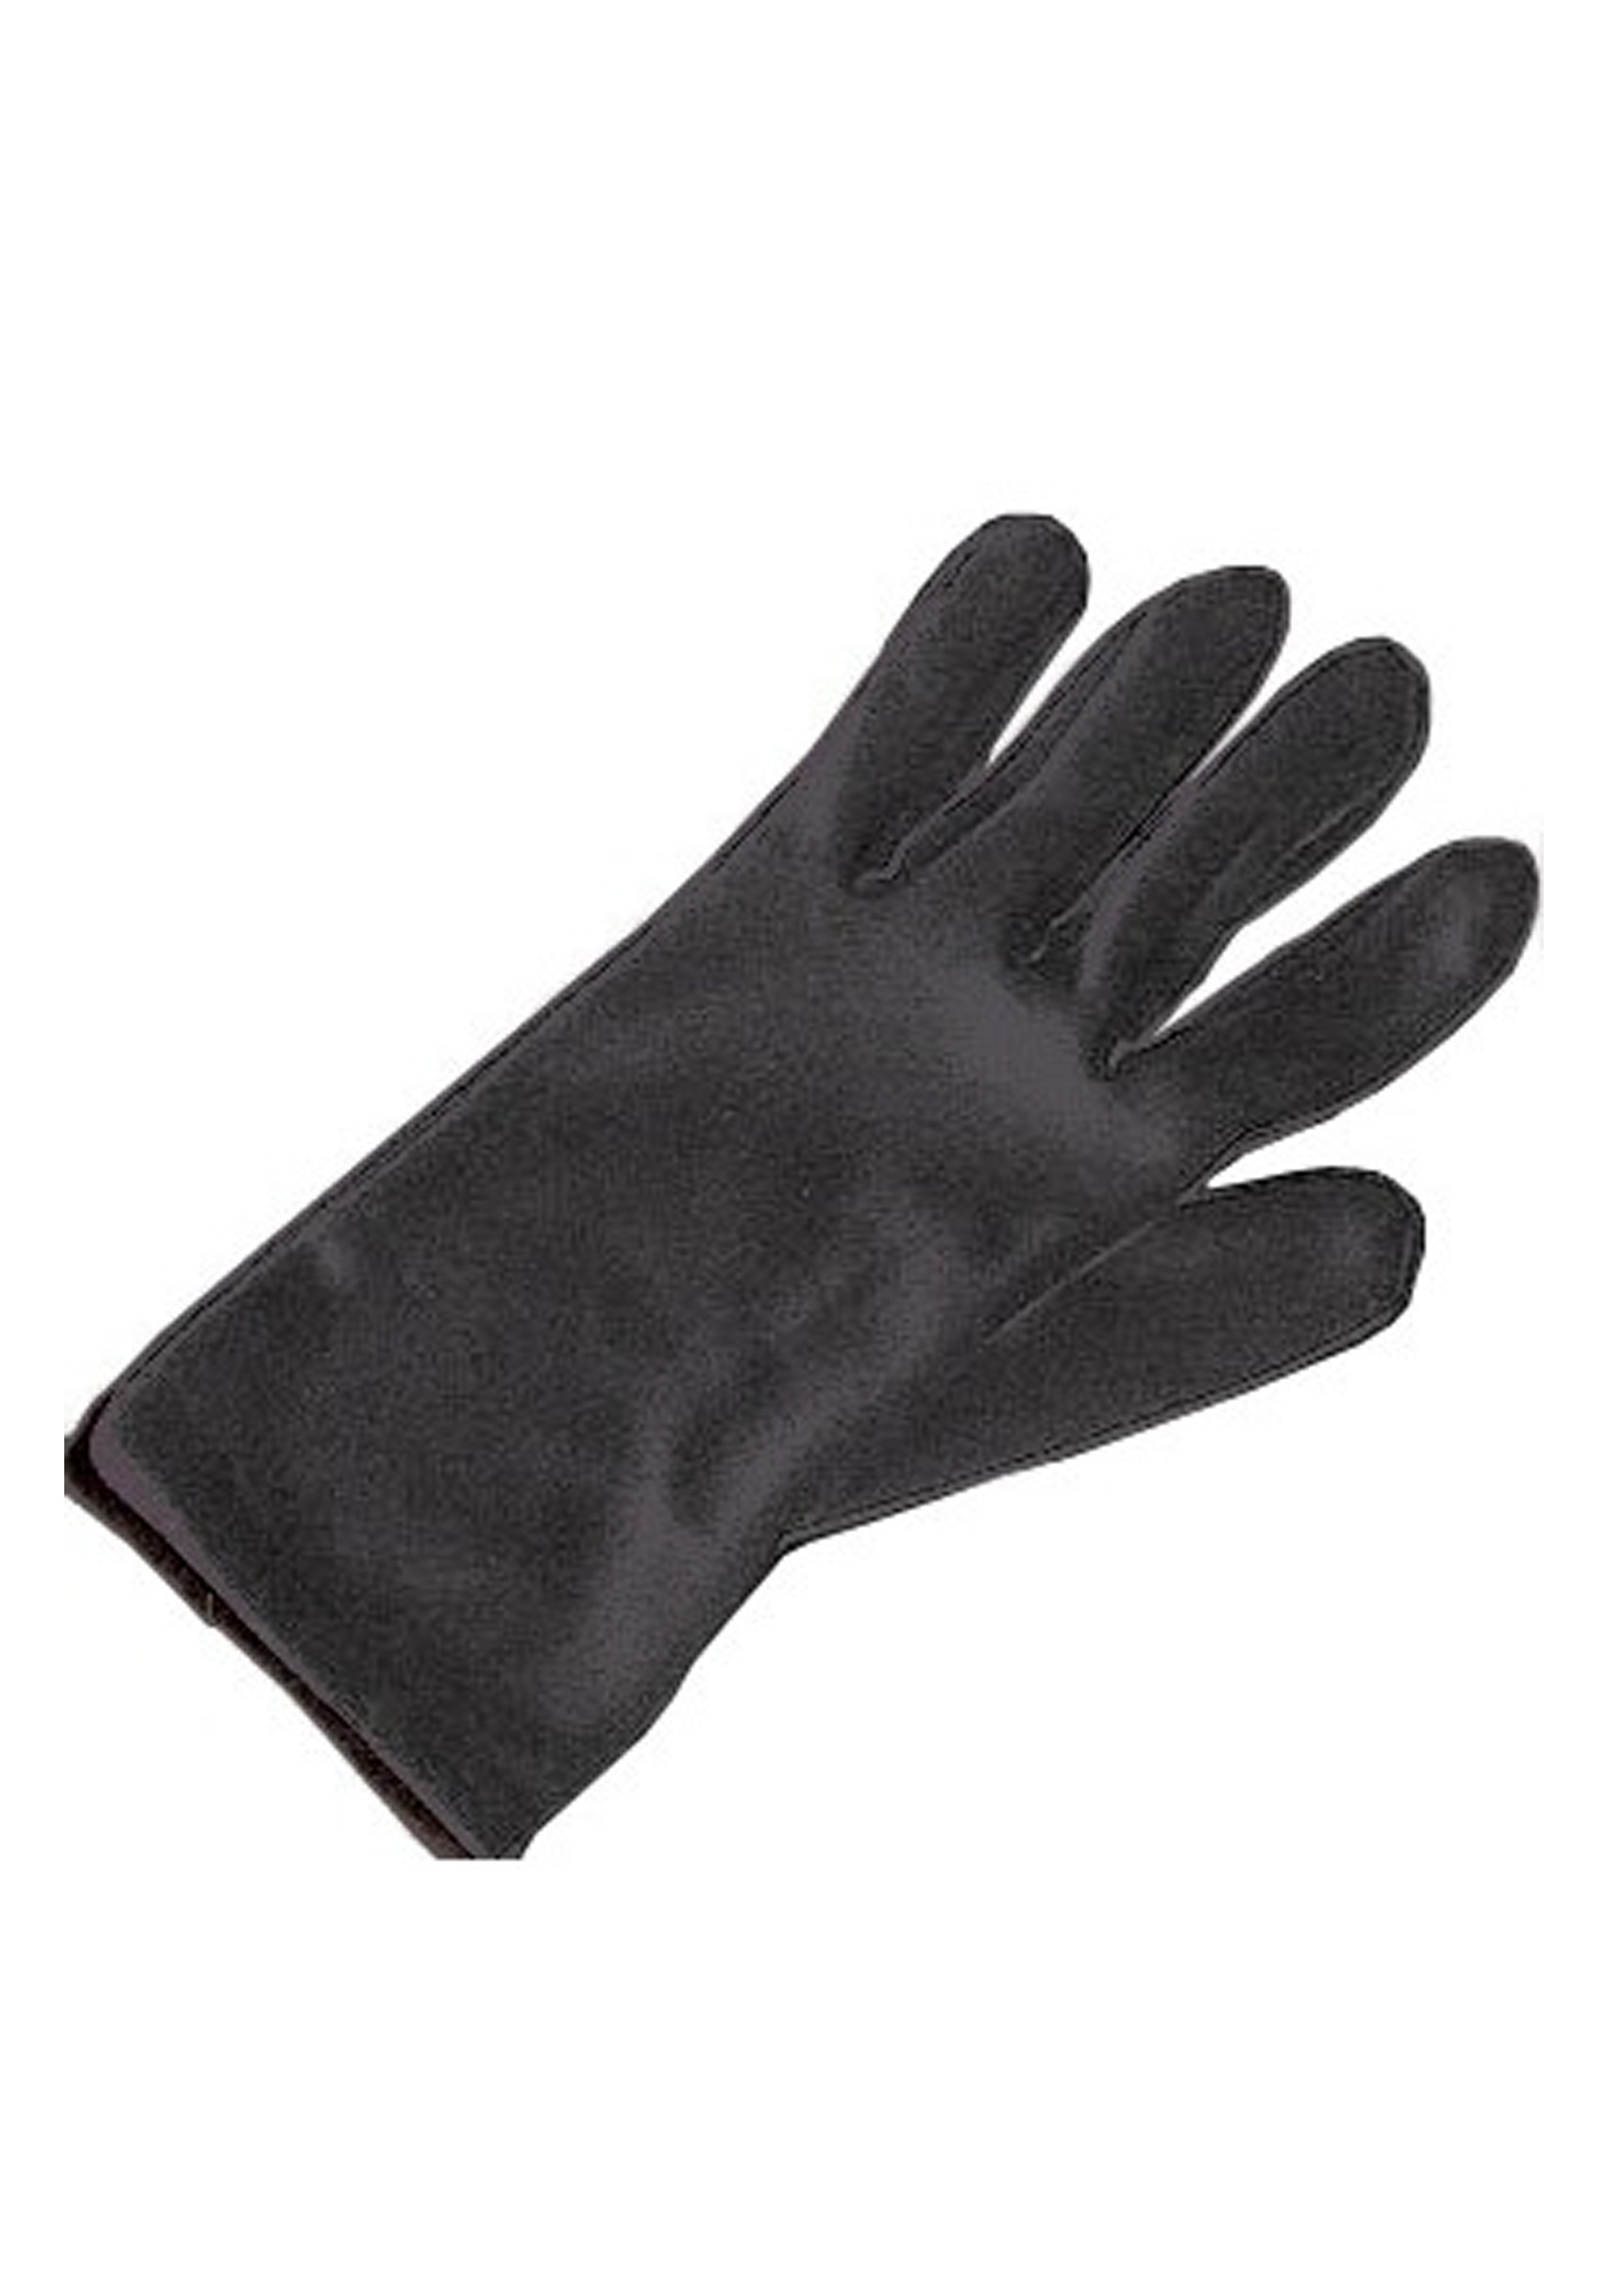 Black Costume Adult Gloves